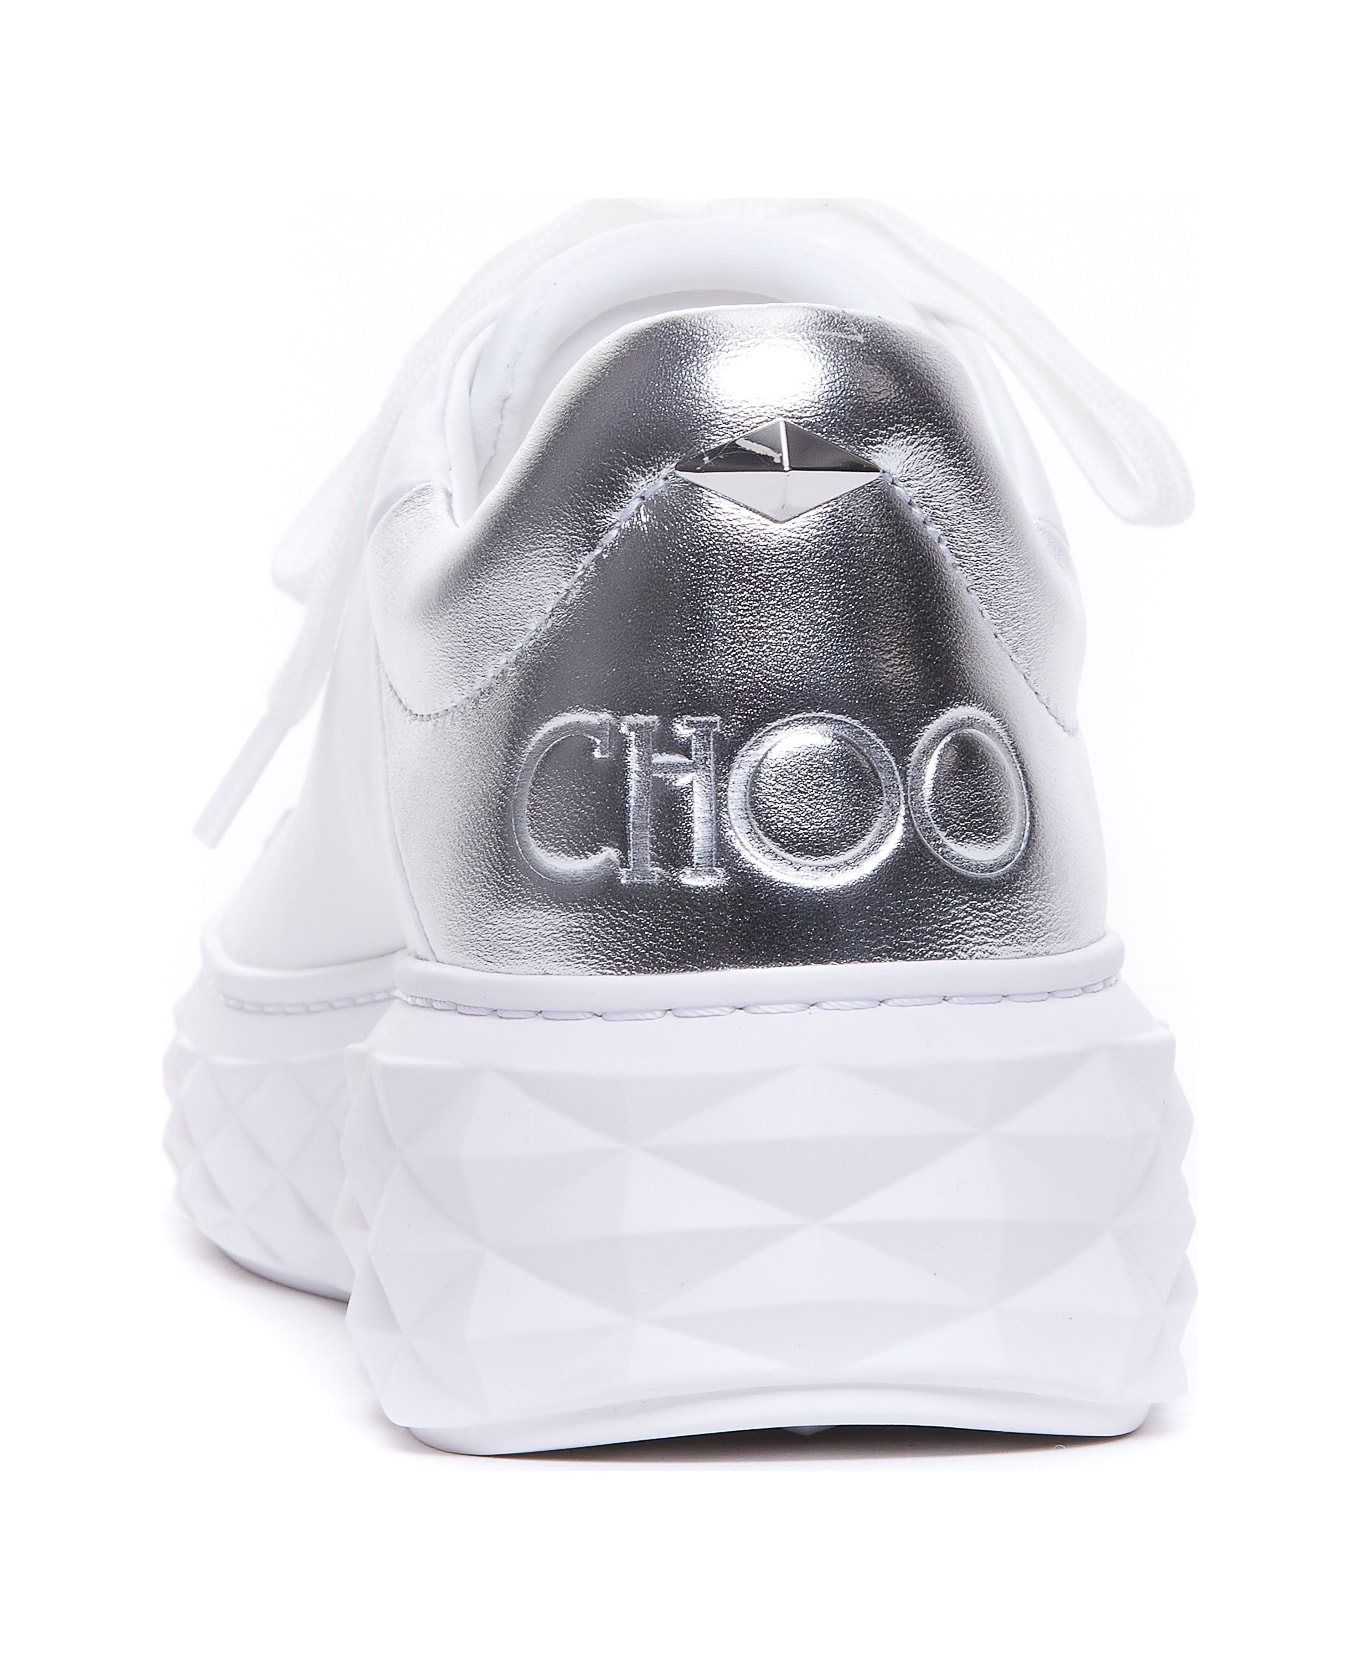 Jimmy Choo Diamond Maxi Sneakers - White